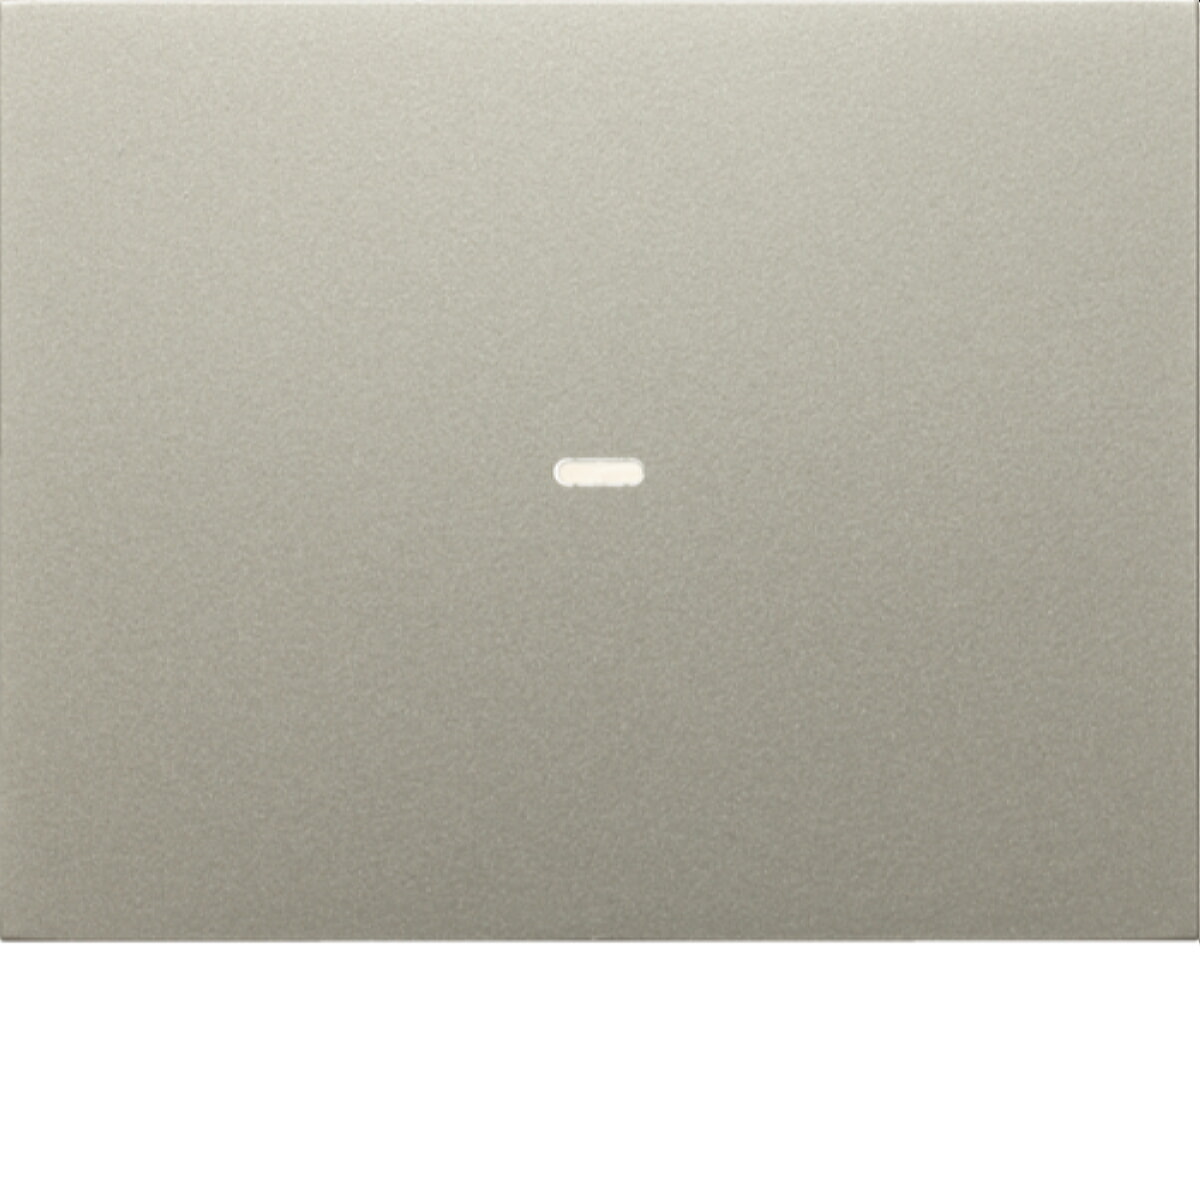 Berker touch cover K.x 1-fold stainless steel 80960273